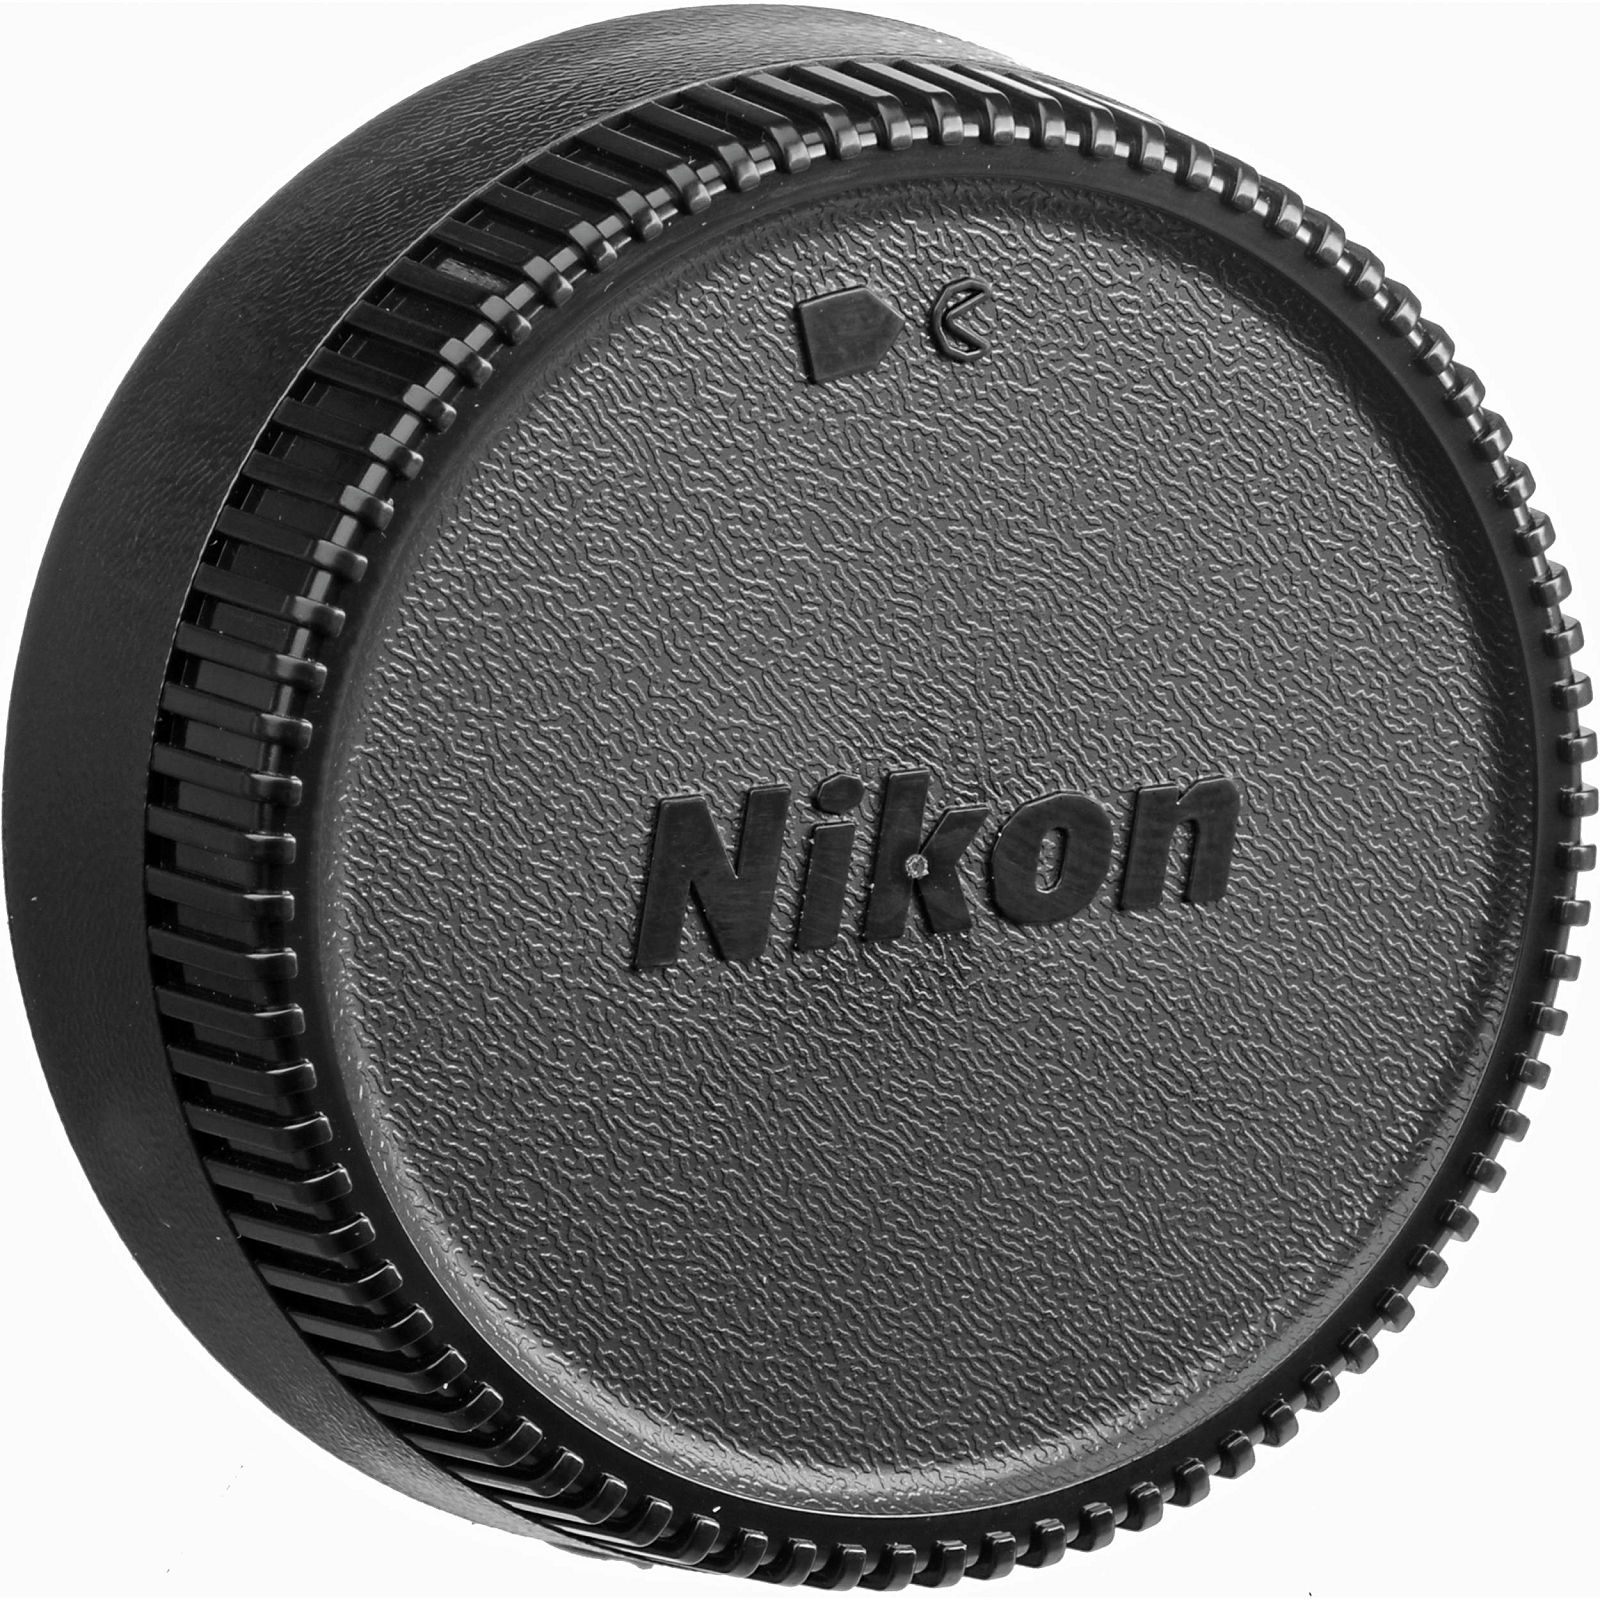 Nikon AF-S 16-35mm f/4G ED VR FX širokokutni objektiv Nikkor 16-35 f4 G Professional auto focus wide angle zoom lens (JAA806DA)